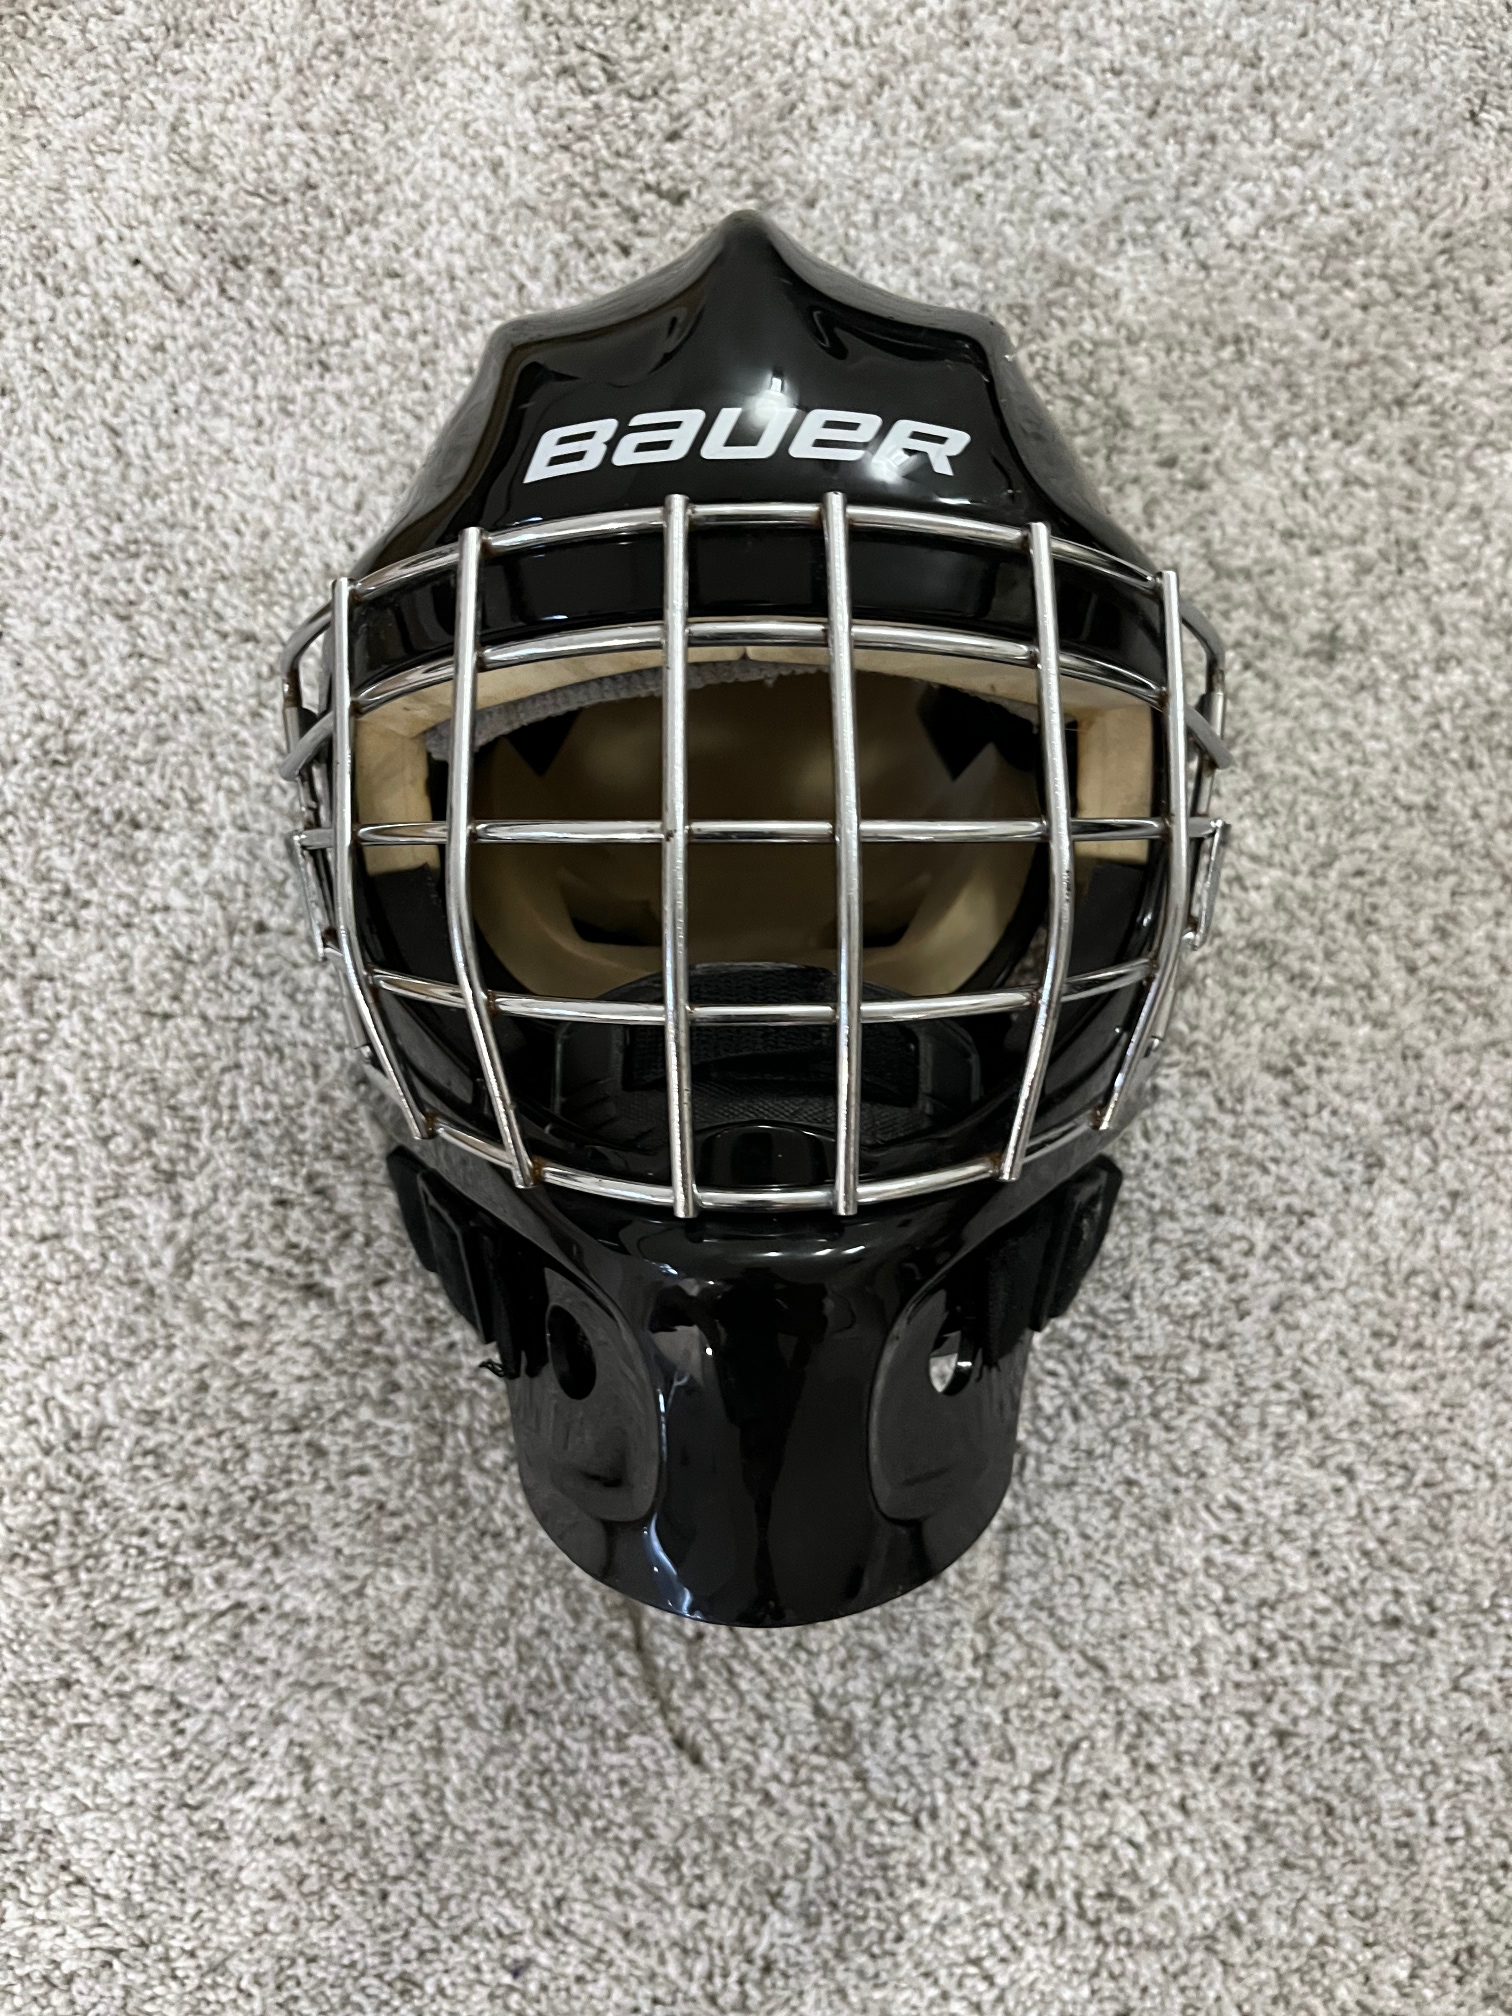 Used Bauer Goalie Mask